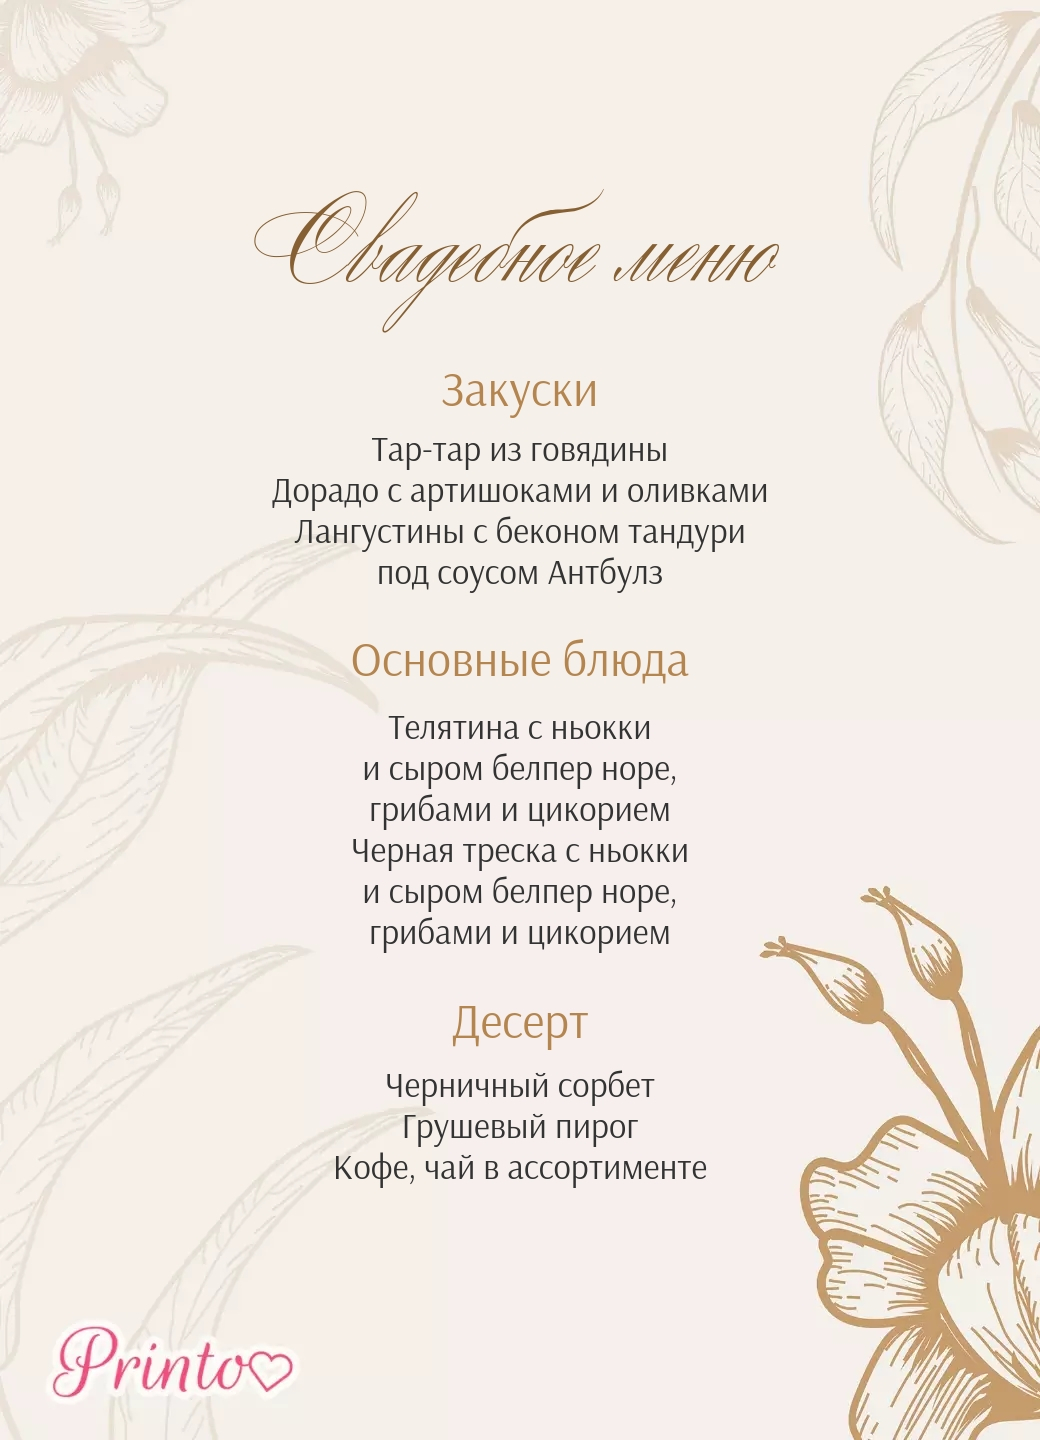 Шаблон свадебного меню "Бронзовое лето"